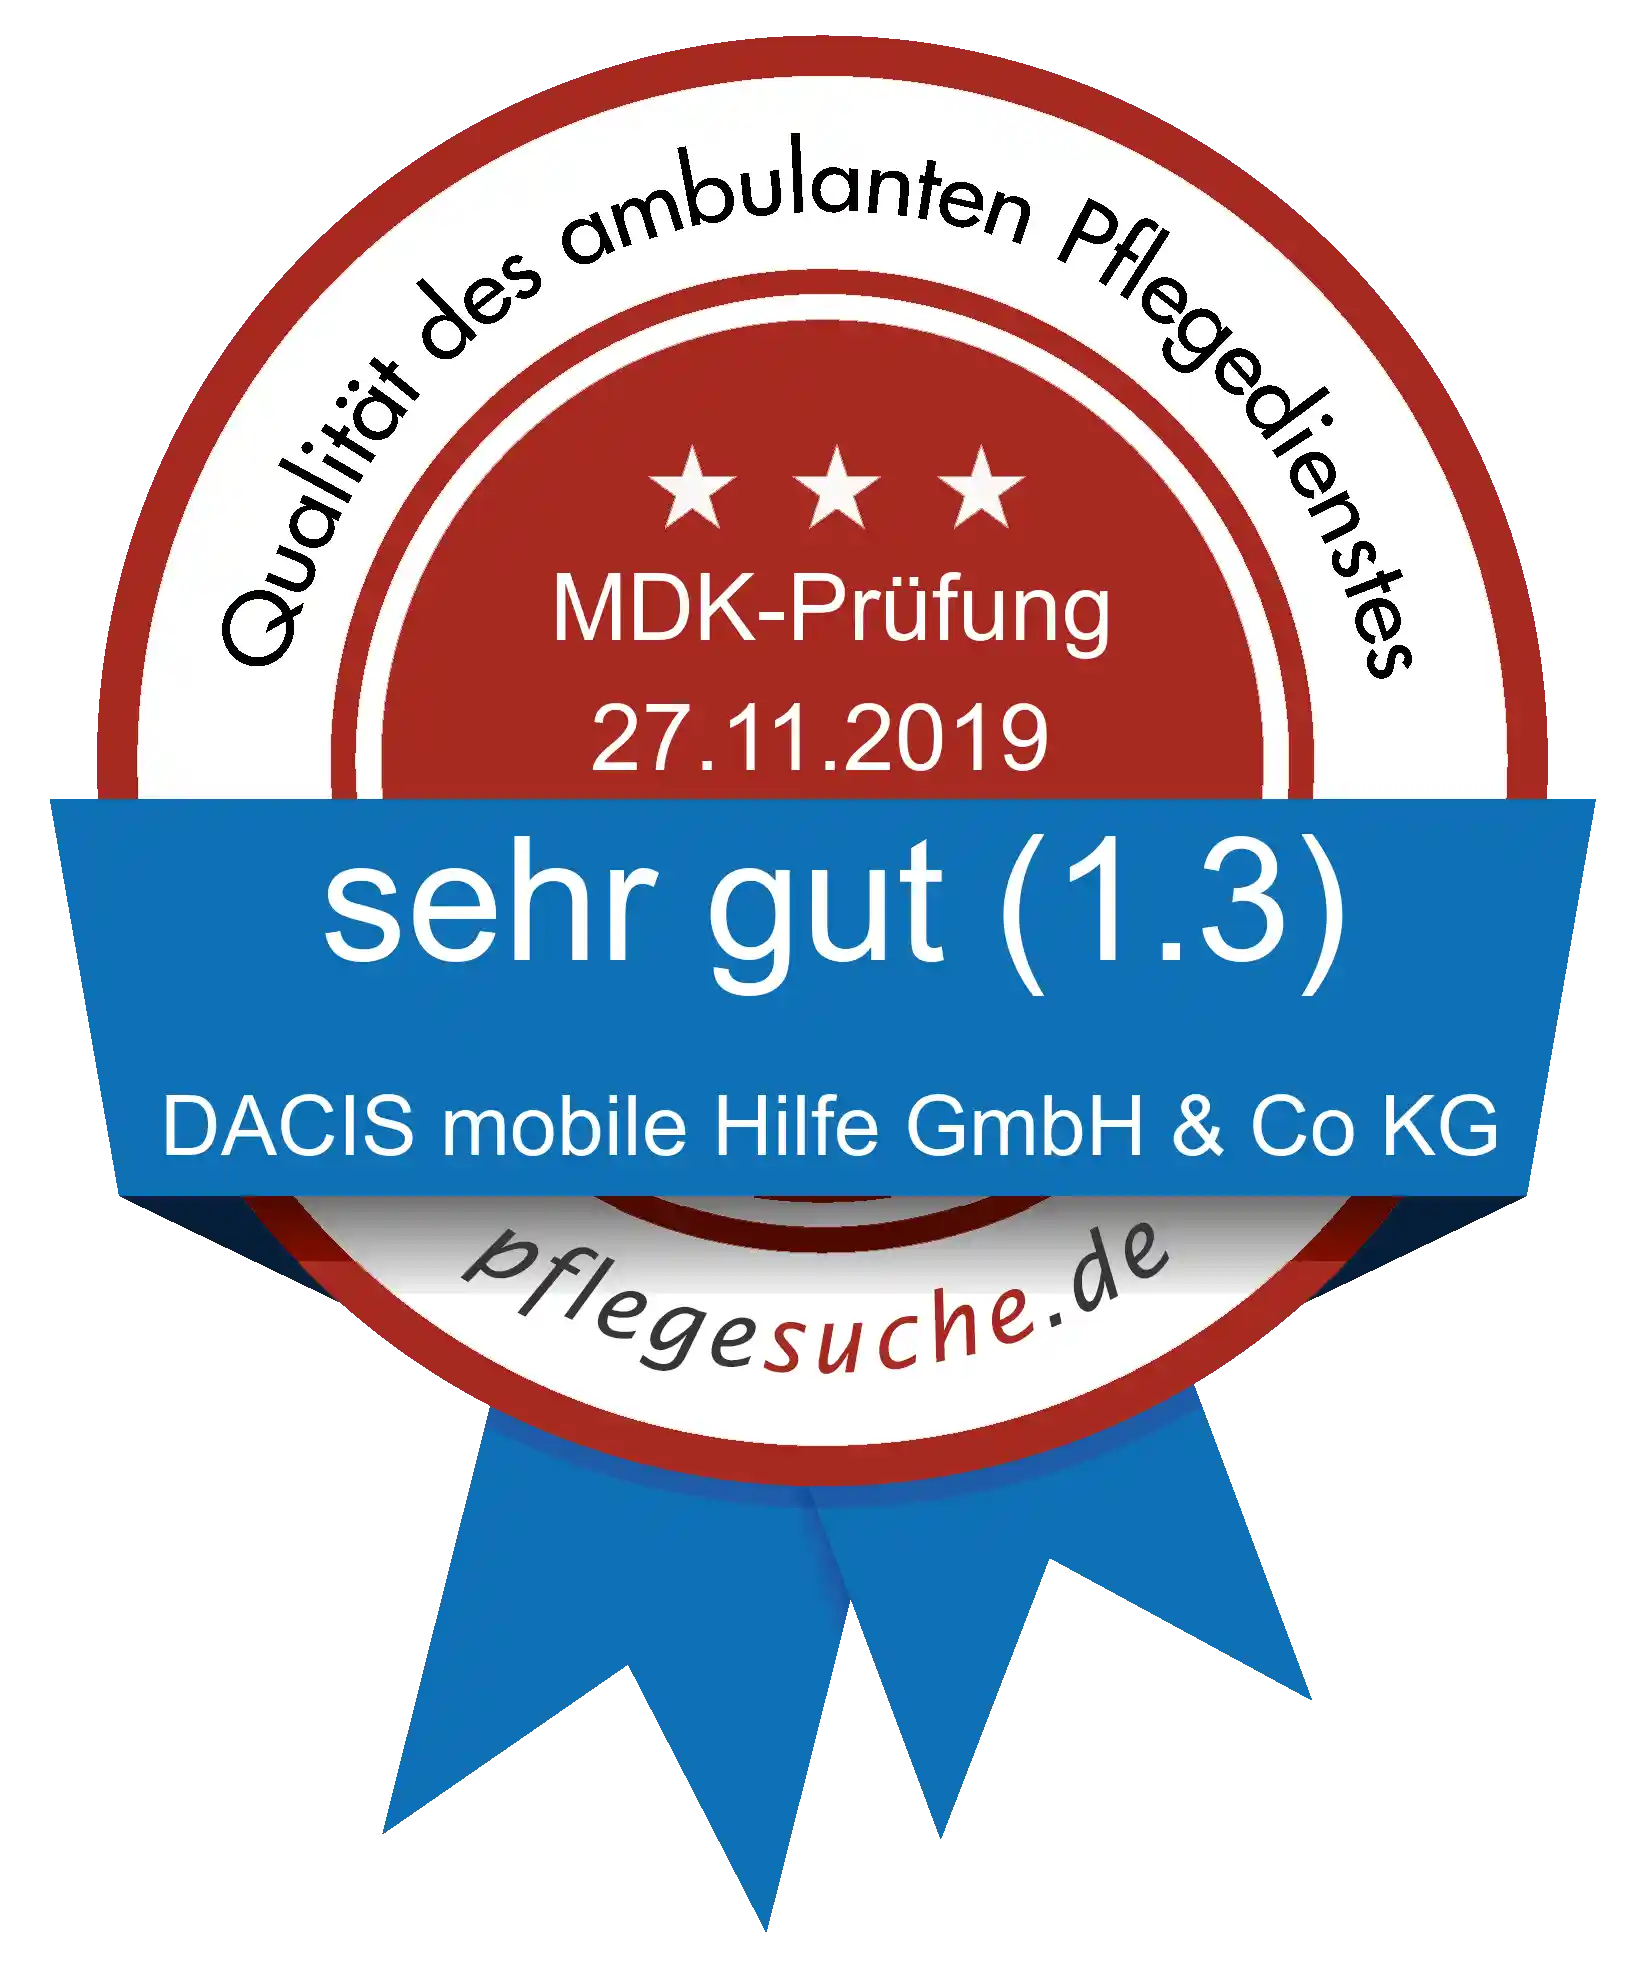 Siegel Benotung: DACIS mobile Hilfe GmbH & Co KG